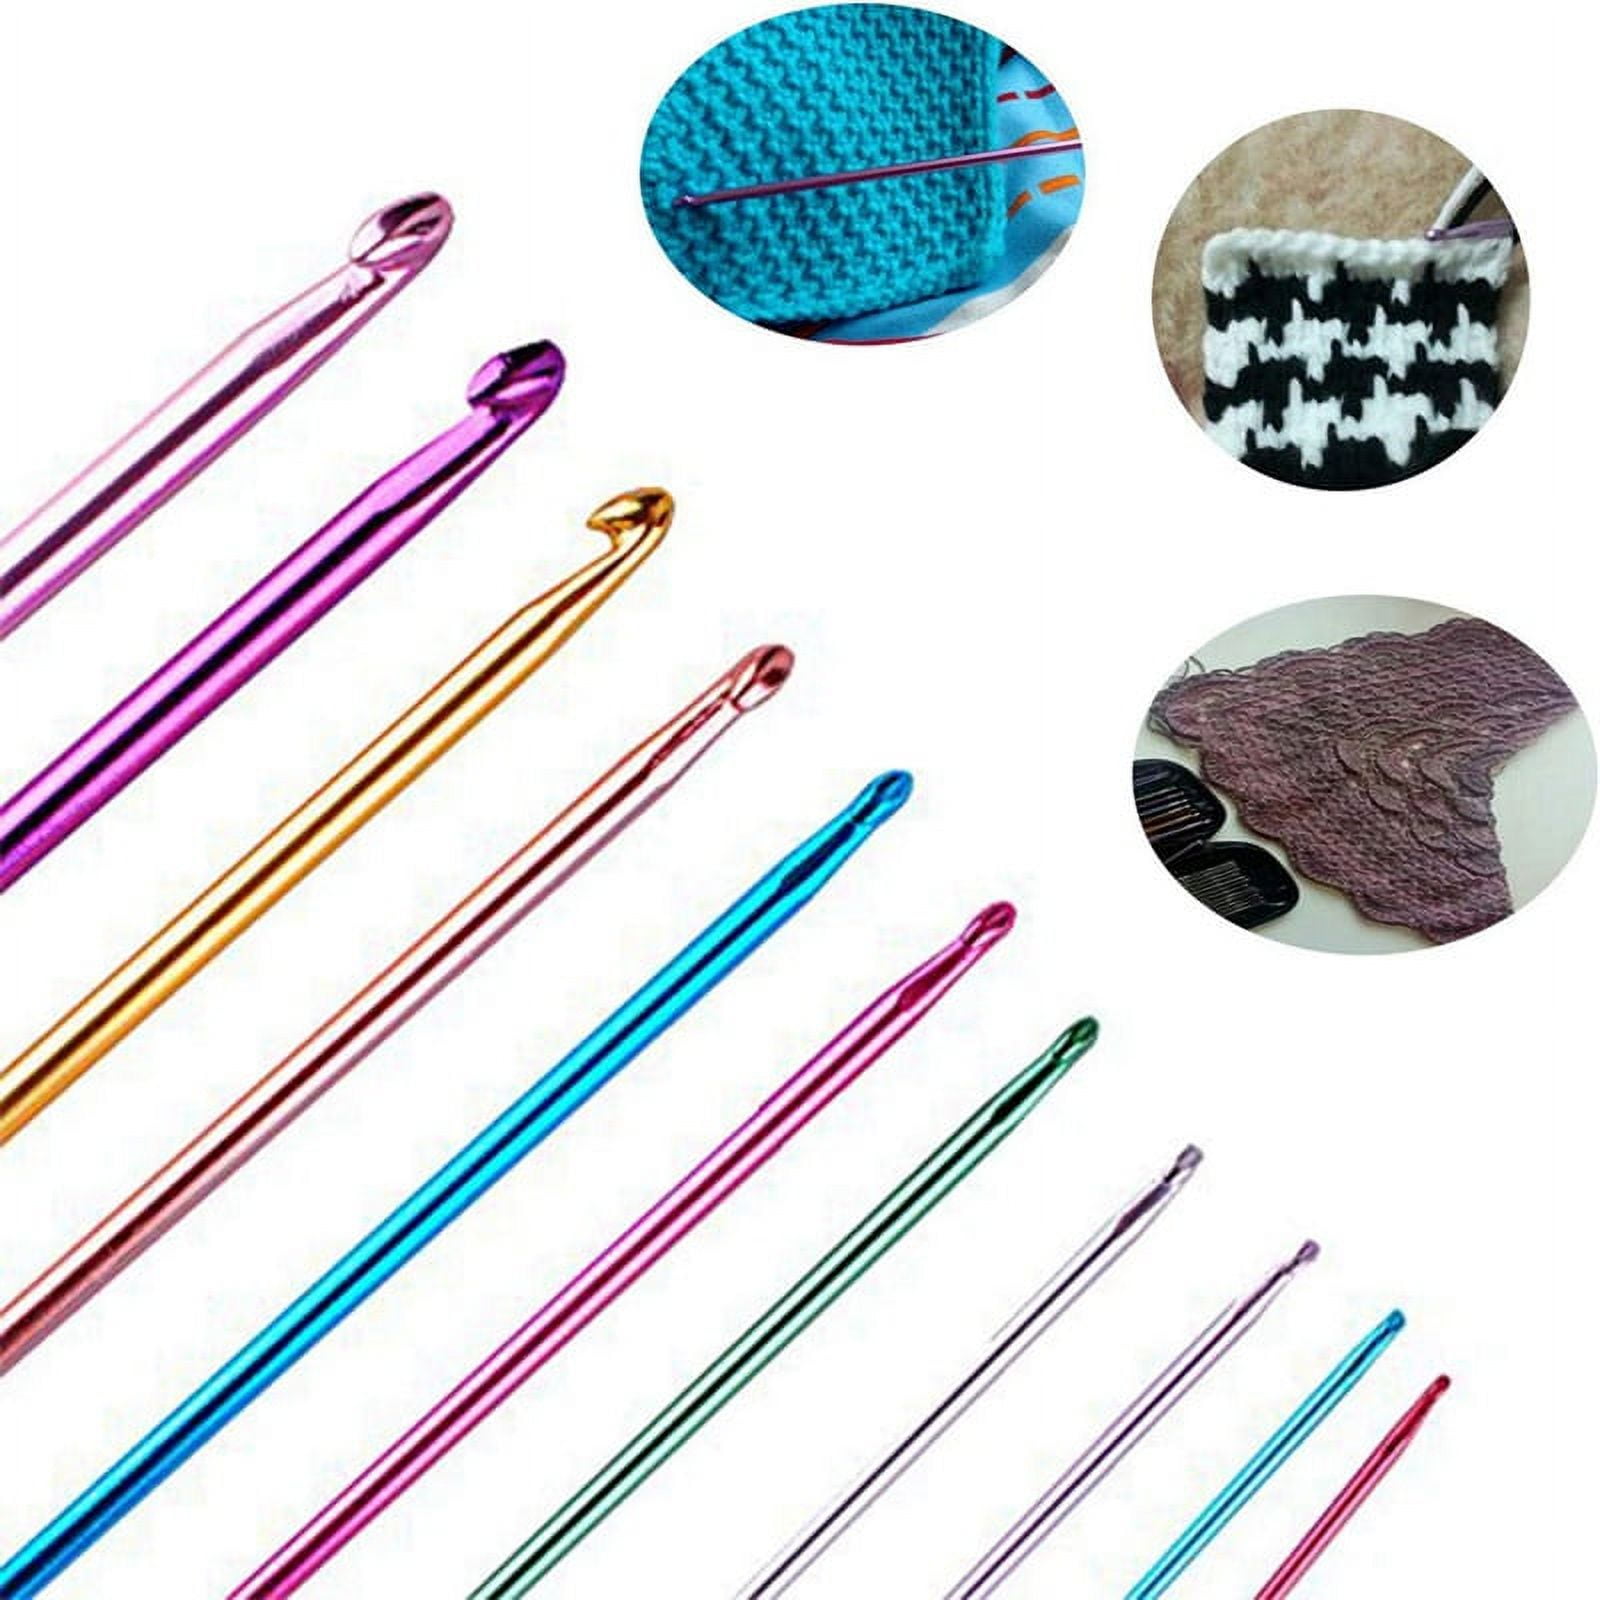  23 Pcs Tunisian Crochet Hooks Set,11pcs Tunisian Afghan  Aluminum Knitting Needles Set 2mm-8mm+12 Sizes Single Point Afghan Tunisian  Crochet Hooks Set,3.0mm-10.0mm (35cm Aluminum Knitting Needles)